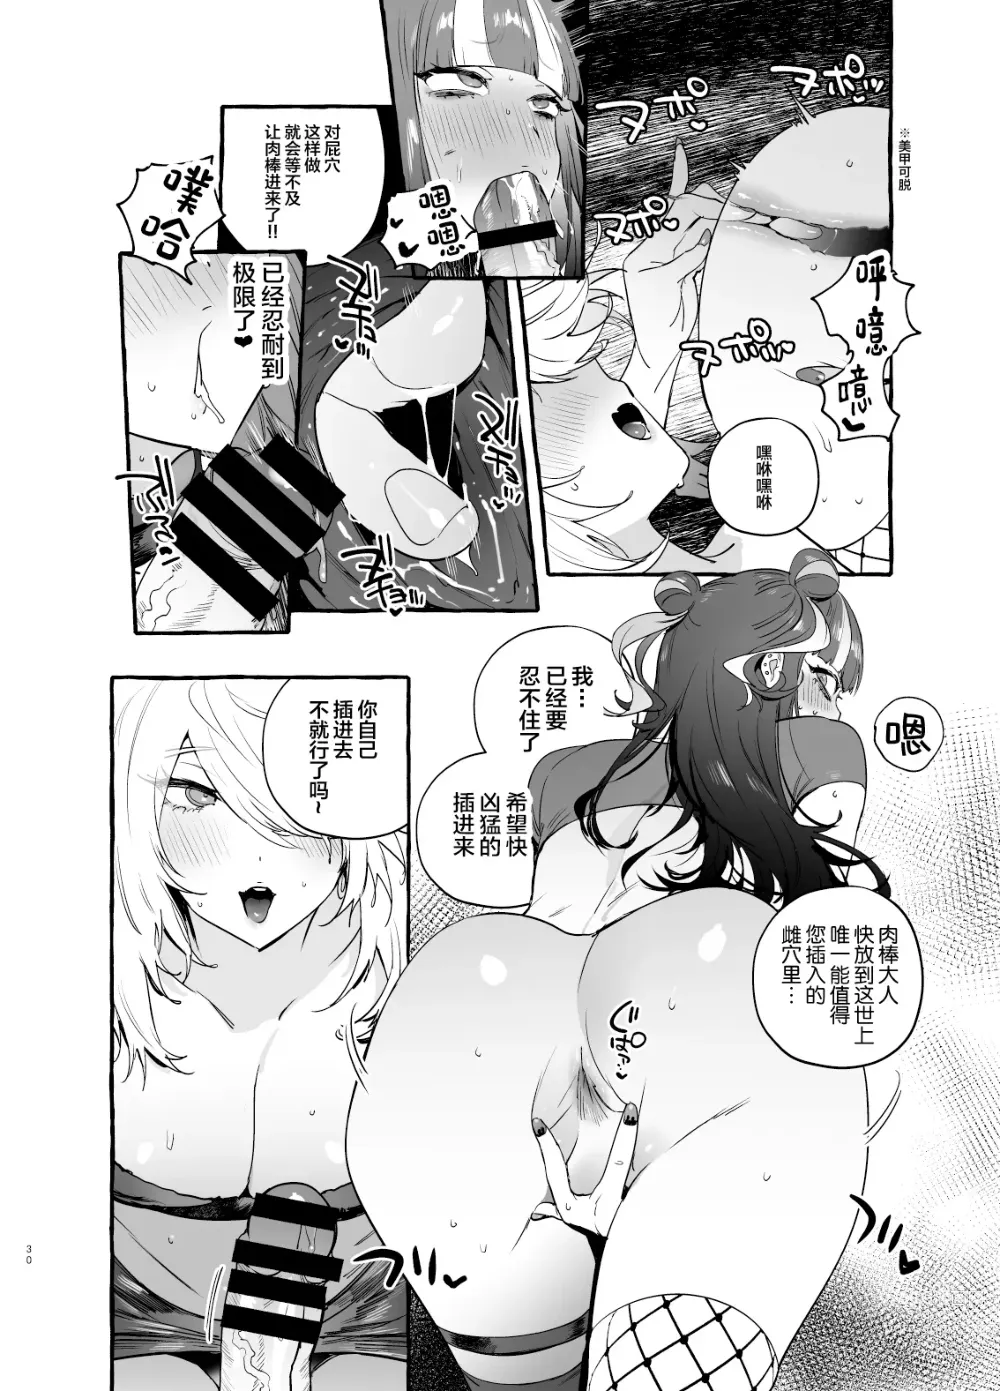 Page 32 of doujinshi Wotasa no Gyaru VS Jirai Otoko